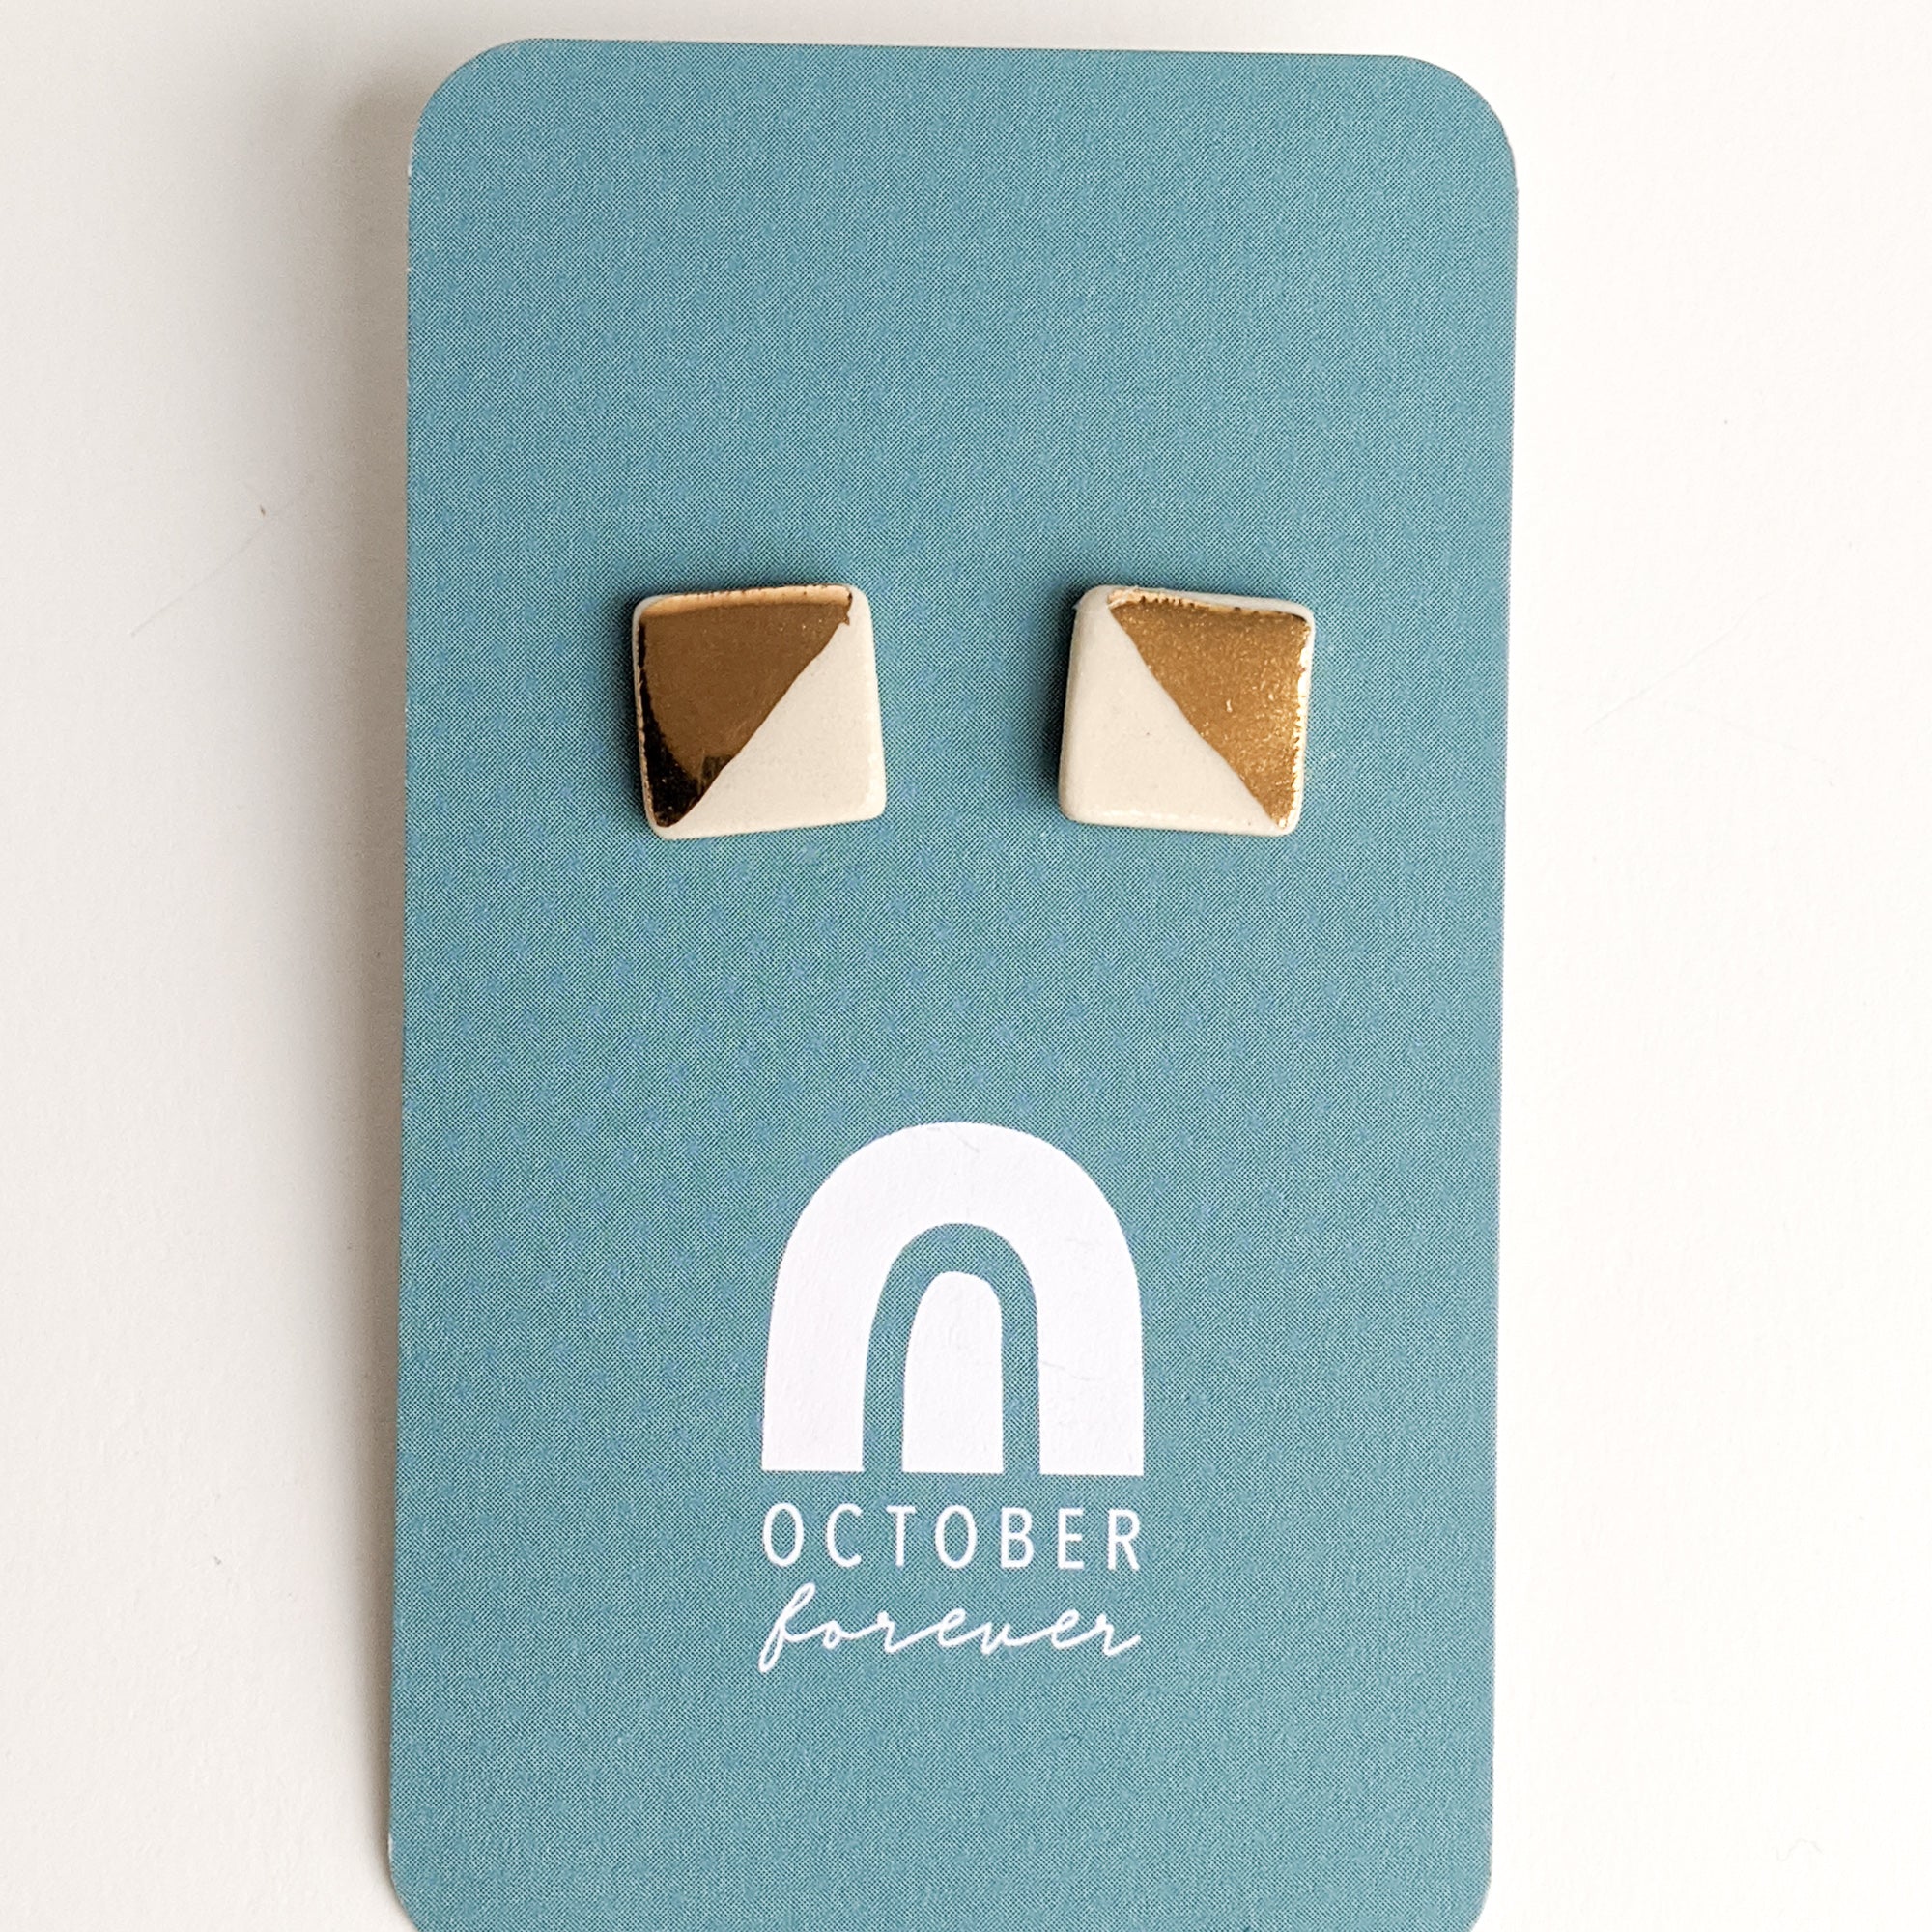 Square Earrings | Square Studs - October Forever